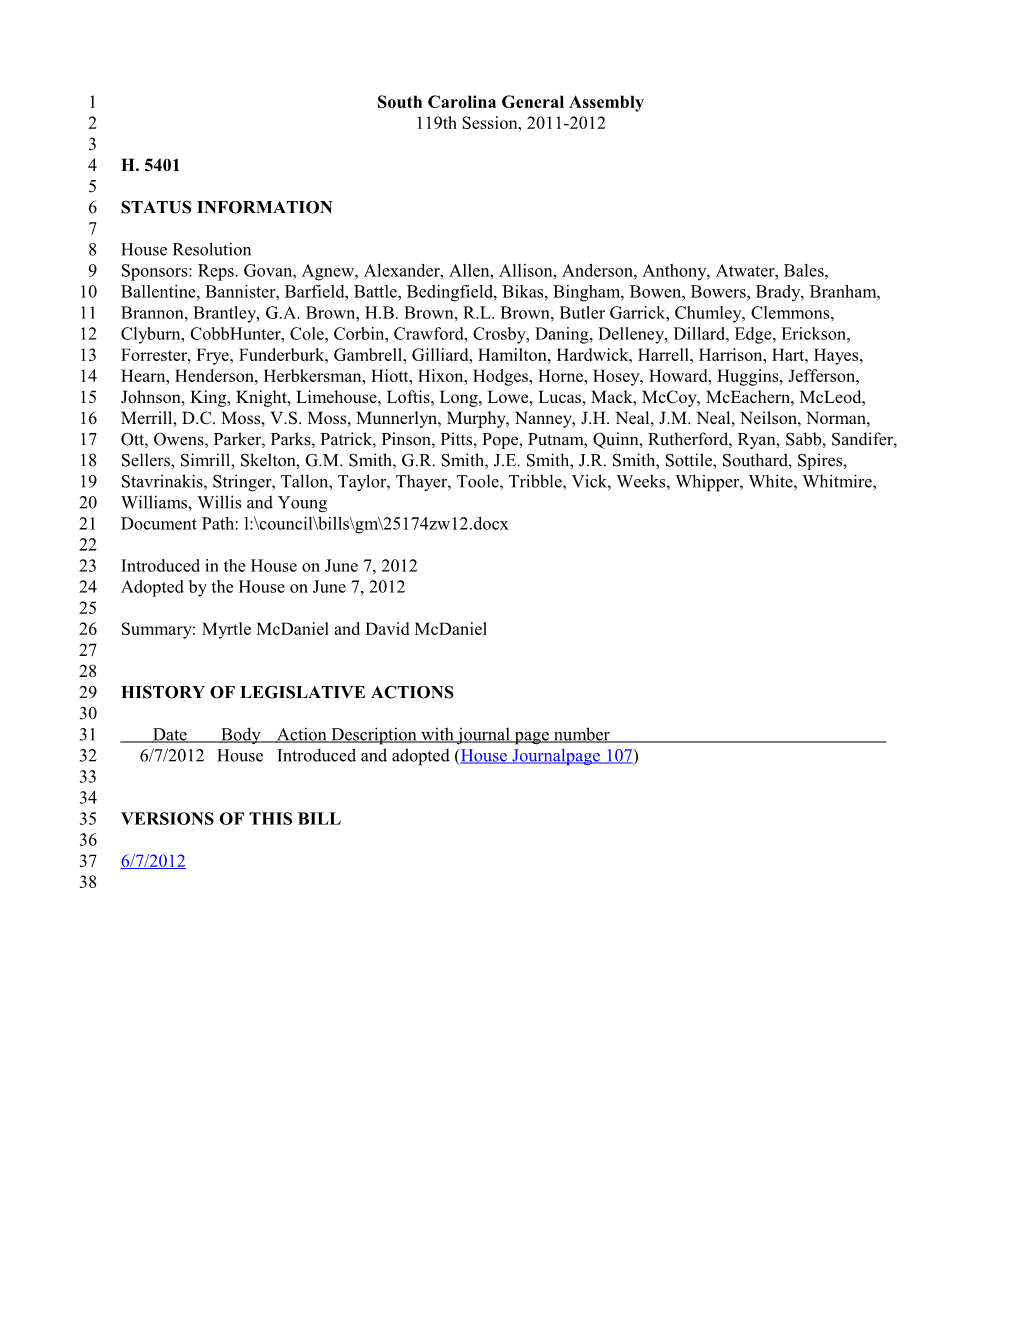 2011-2012 Bill 5401: Myrtle Mcdaniel and David Mcdaniel - South Carolina Legislature Online